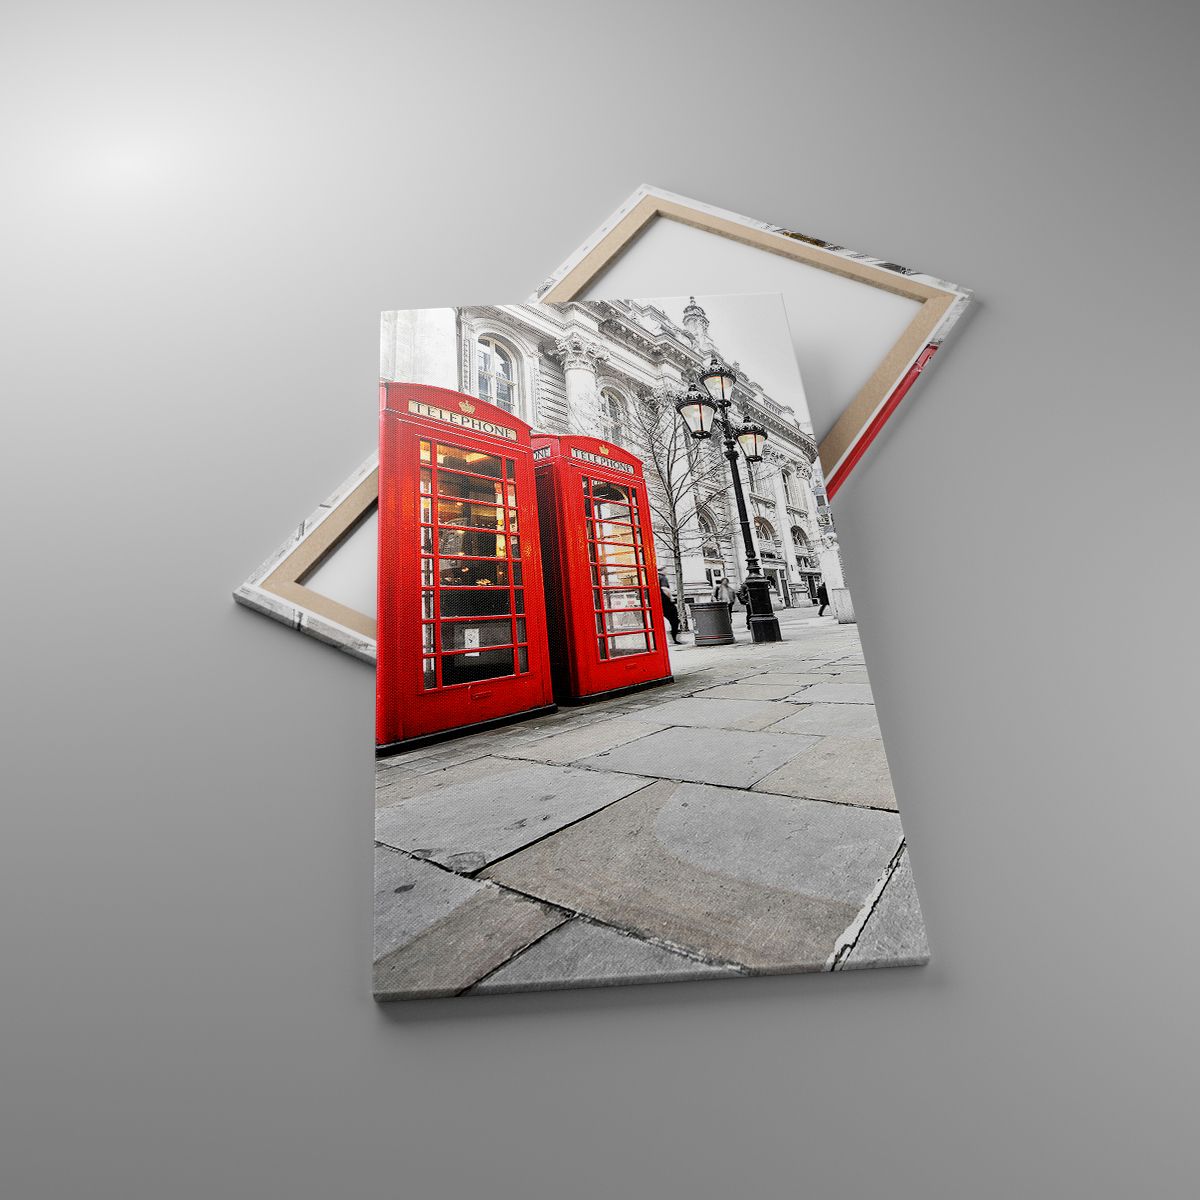 Leinwandbild Städte, Leinwandbild London, Leinwandbild Die Architektur, Leinwandbild Telefonzelle, Leinwandbild England